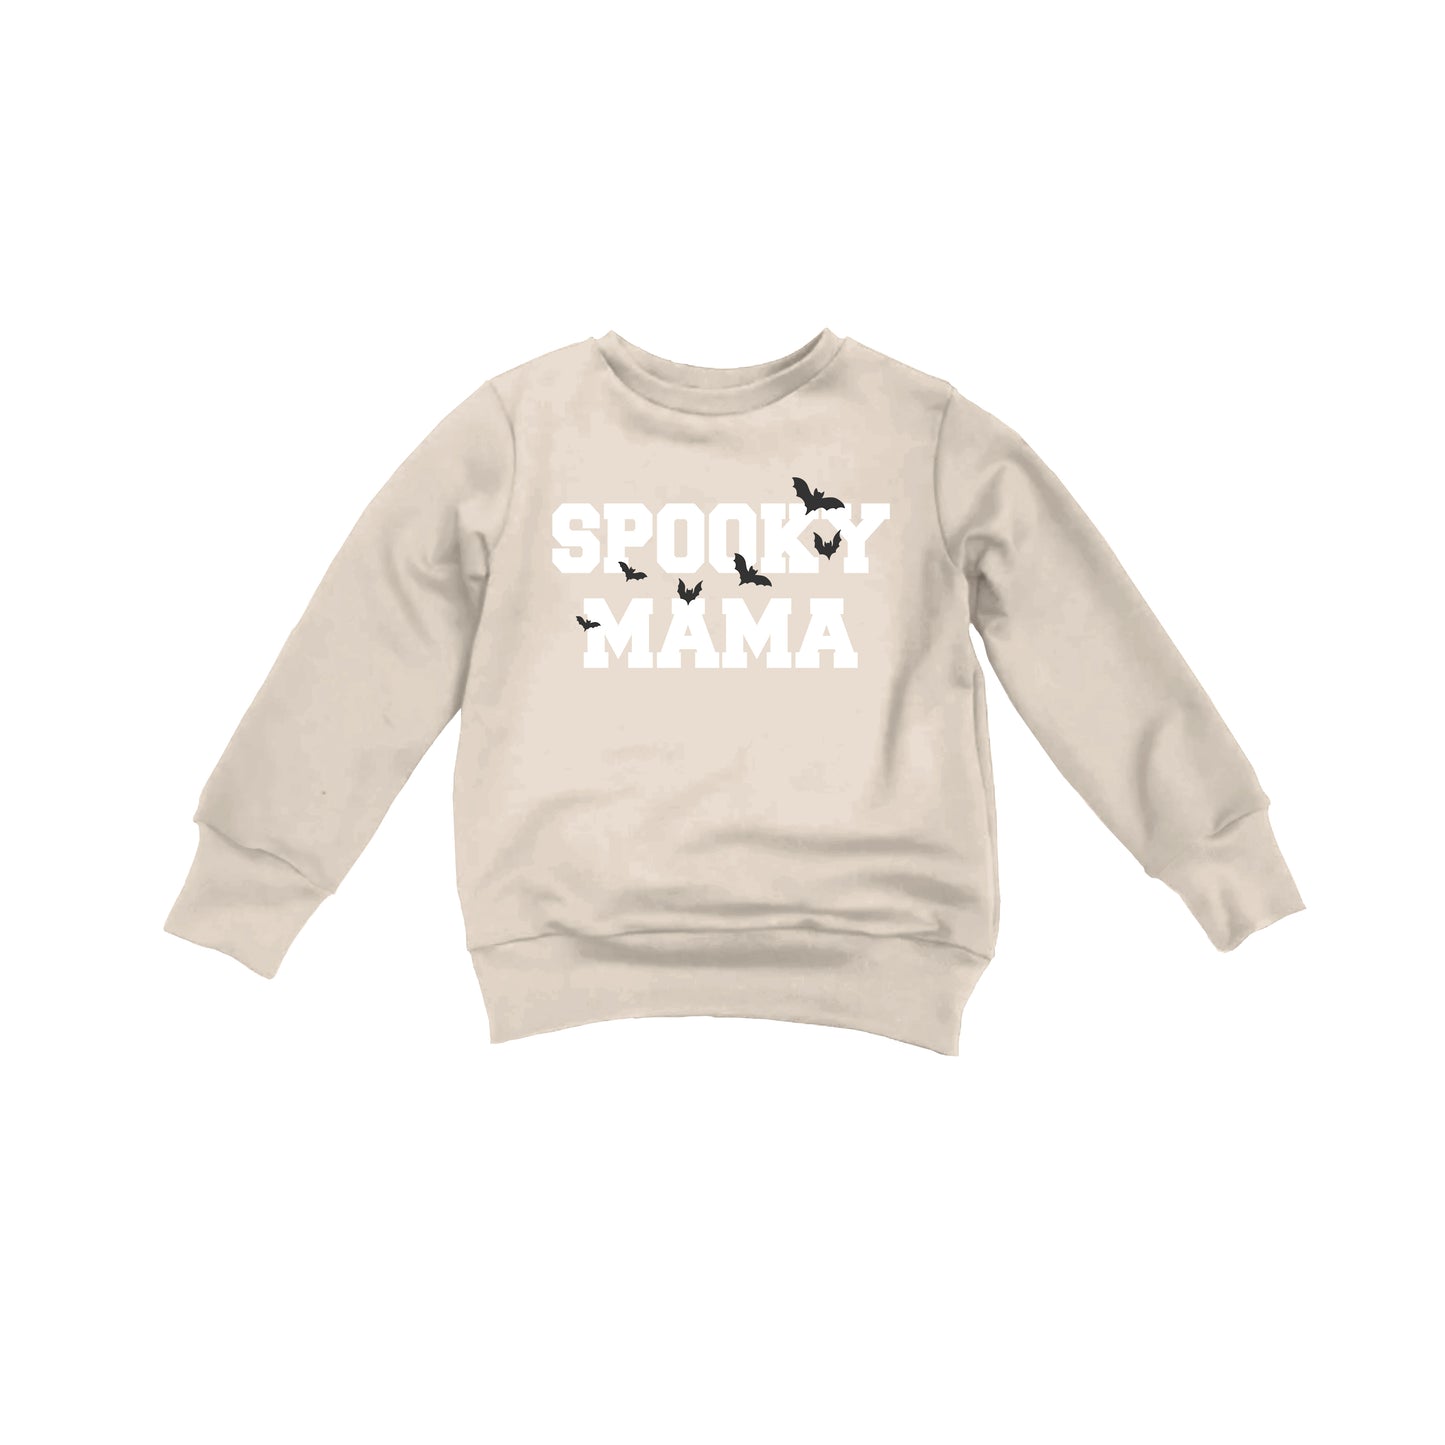 Spooky MAMA Sweatshirt - Natural